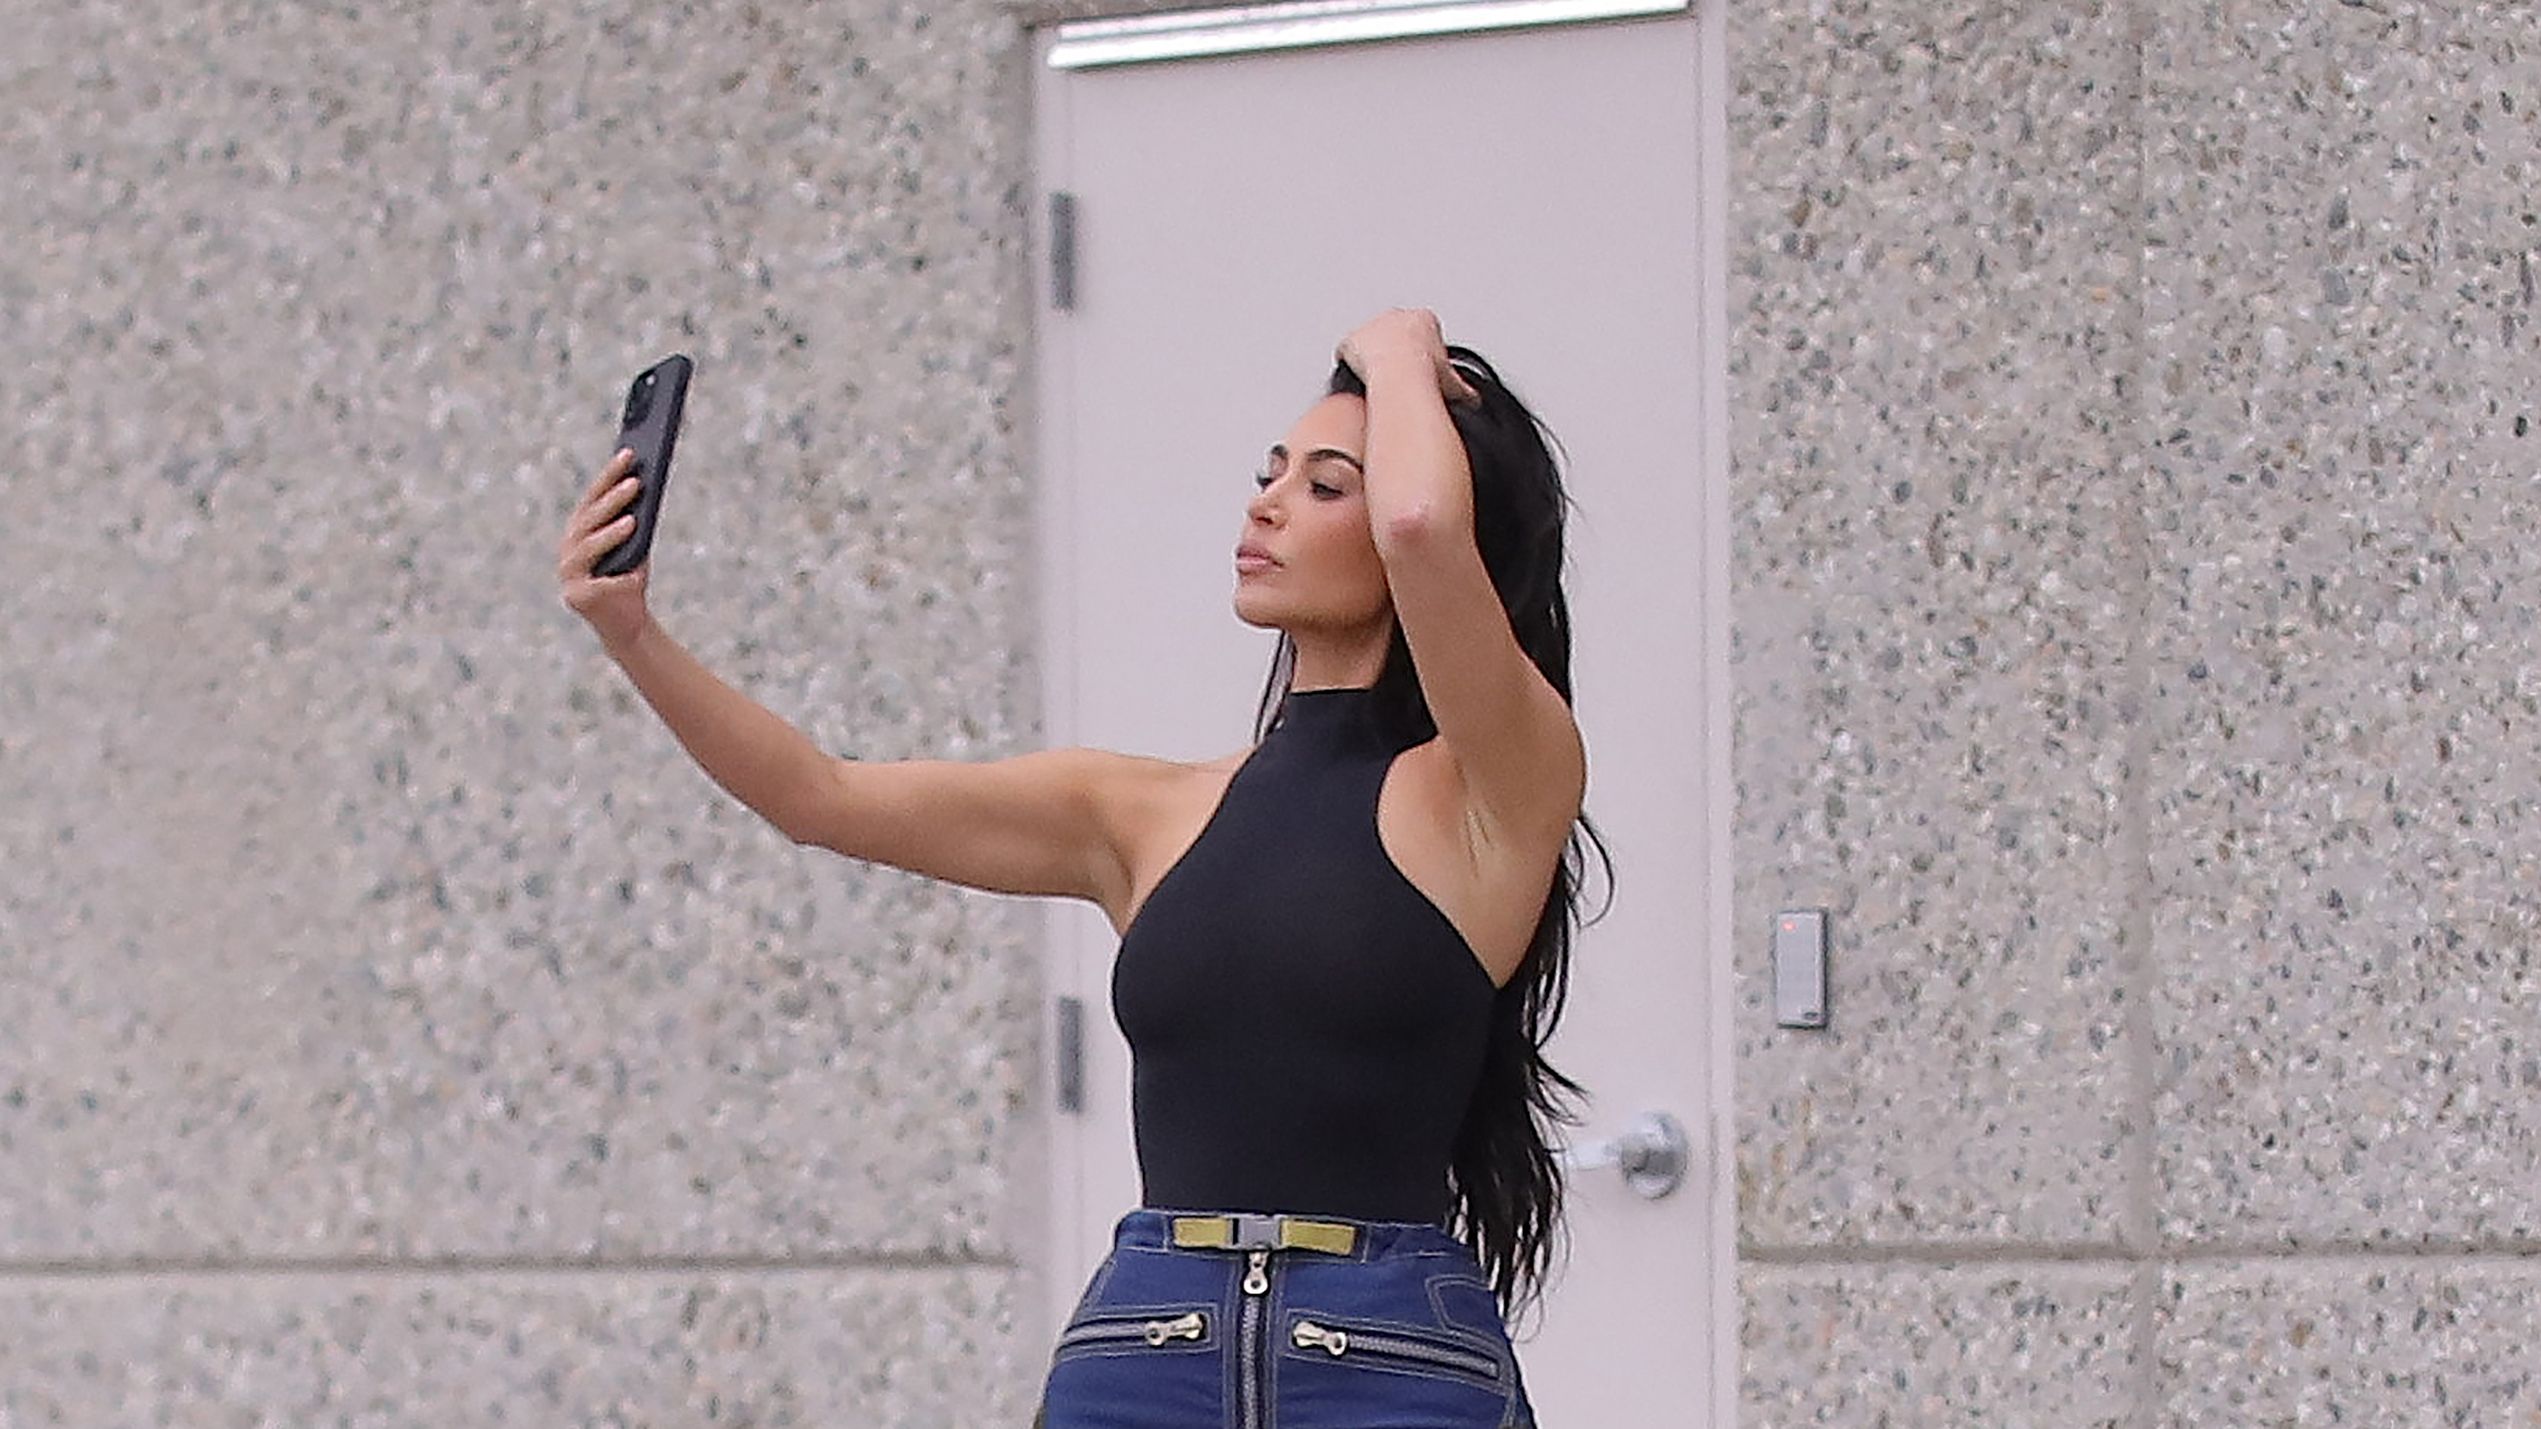 Kim Kardashian Shares Creepy Shadow of Woman in Mirror Selfie